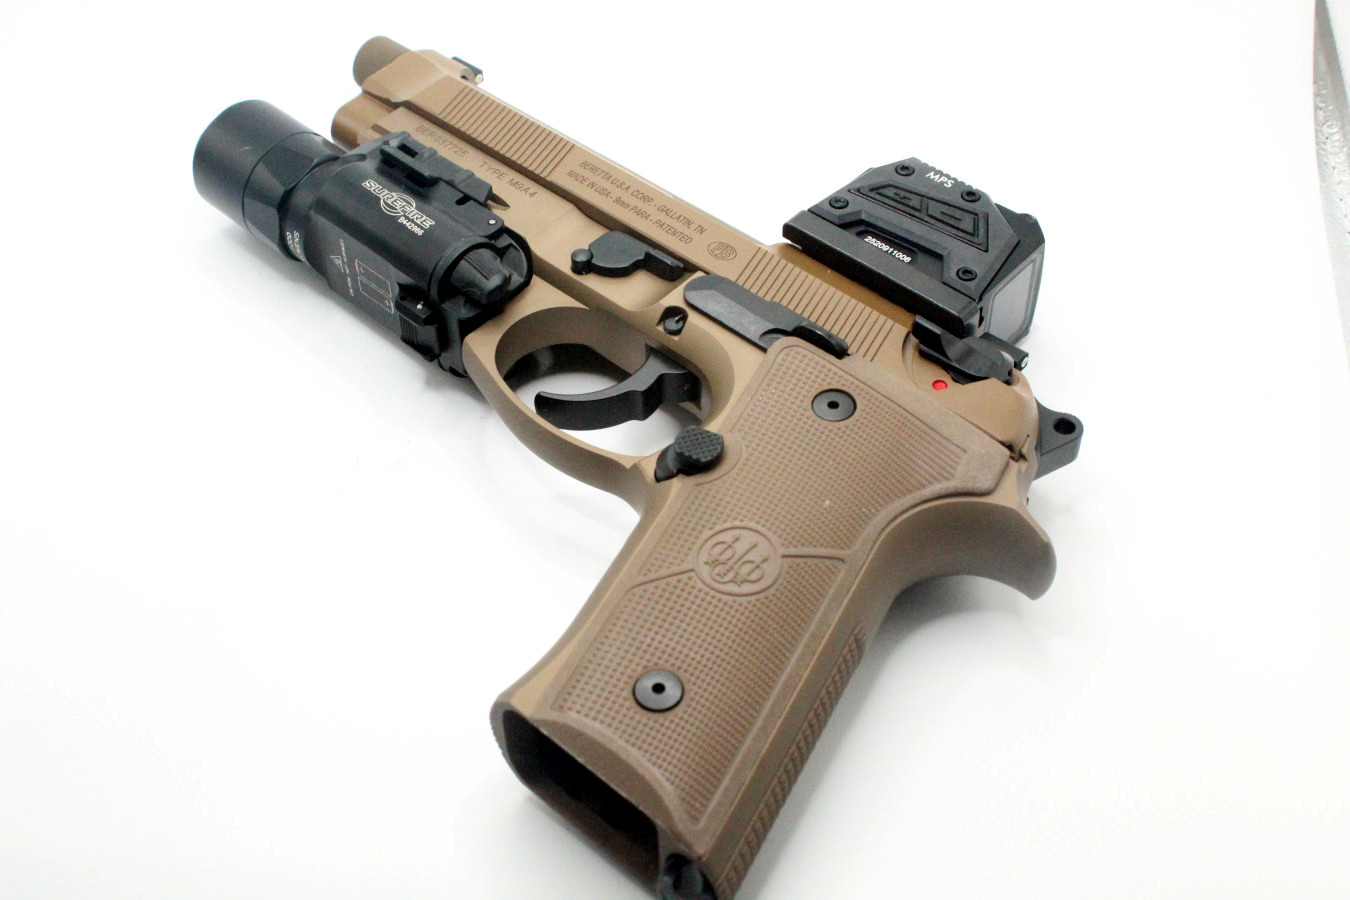 The Ultimate Beretta 92 : M9A4 RDO Gun Review 